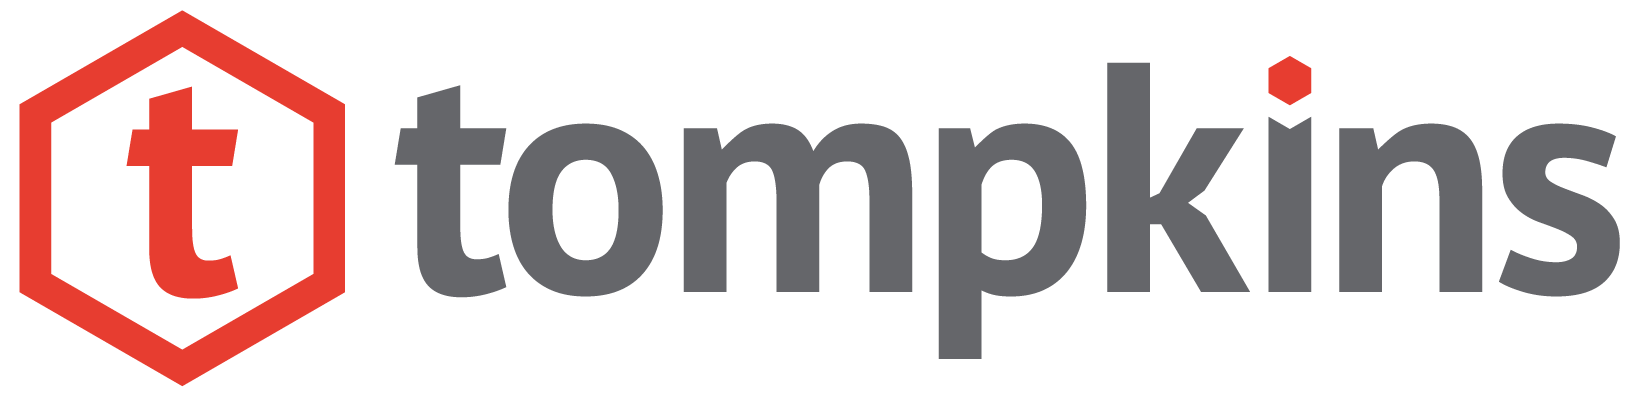 Tompkins Logo - Home - Tompkins Supply Chain Leadership Forum